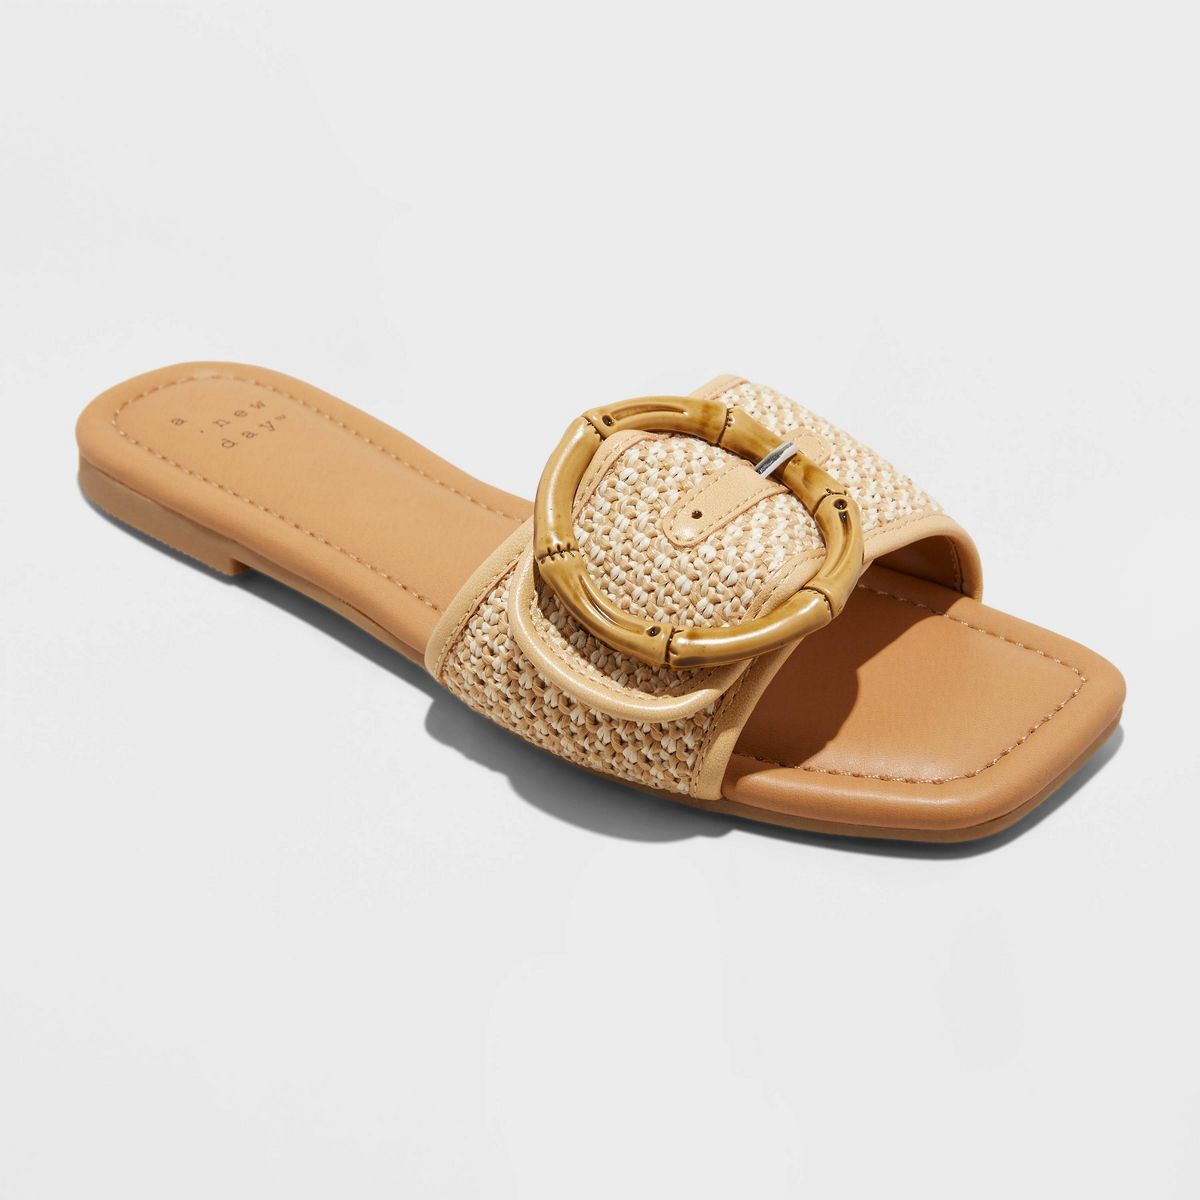 Women's Bennie Buckle Slide Sandals with Memory Foam Insole - A New Day™ Beige 8.5 | Target